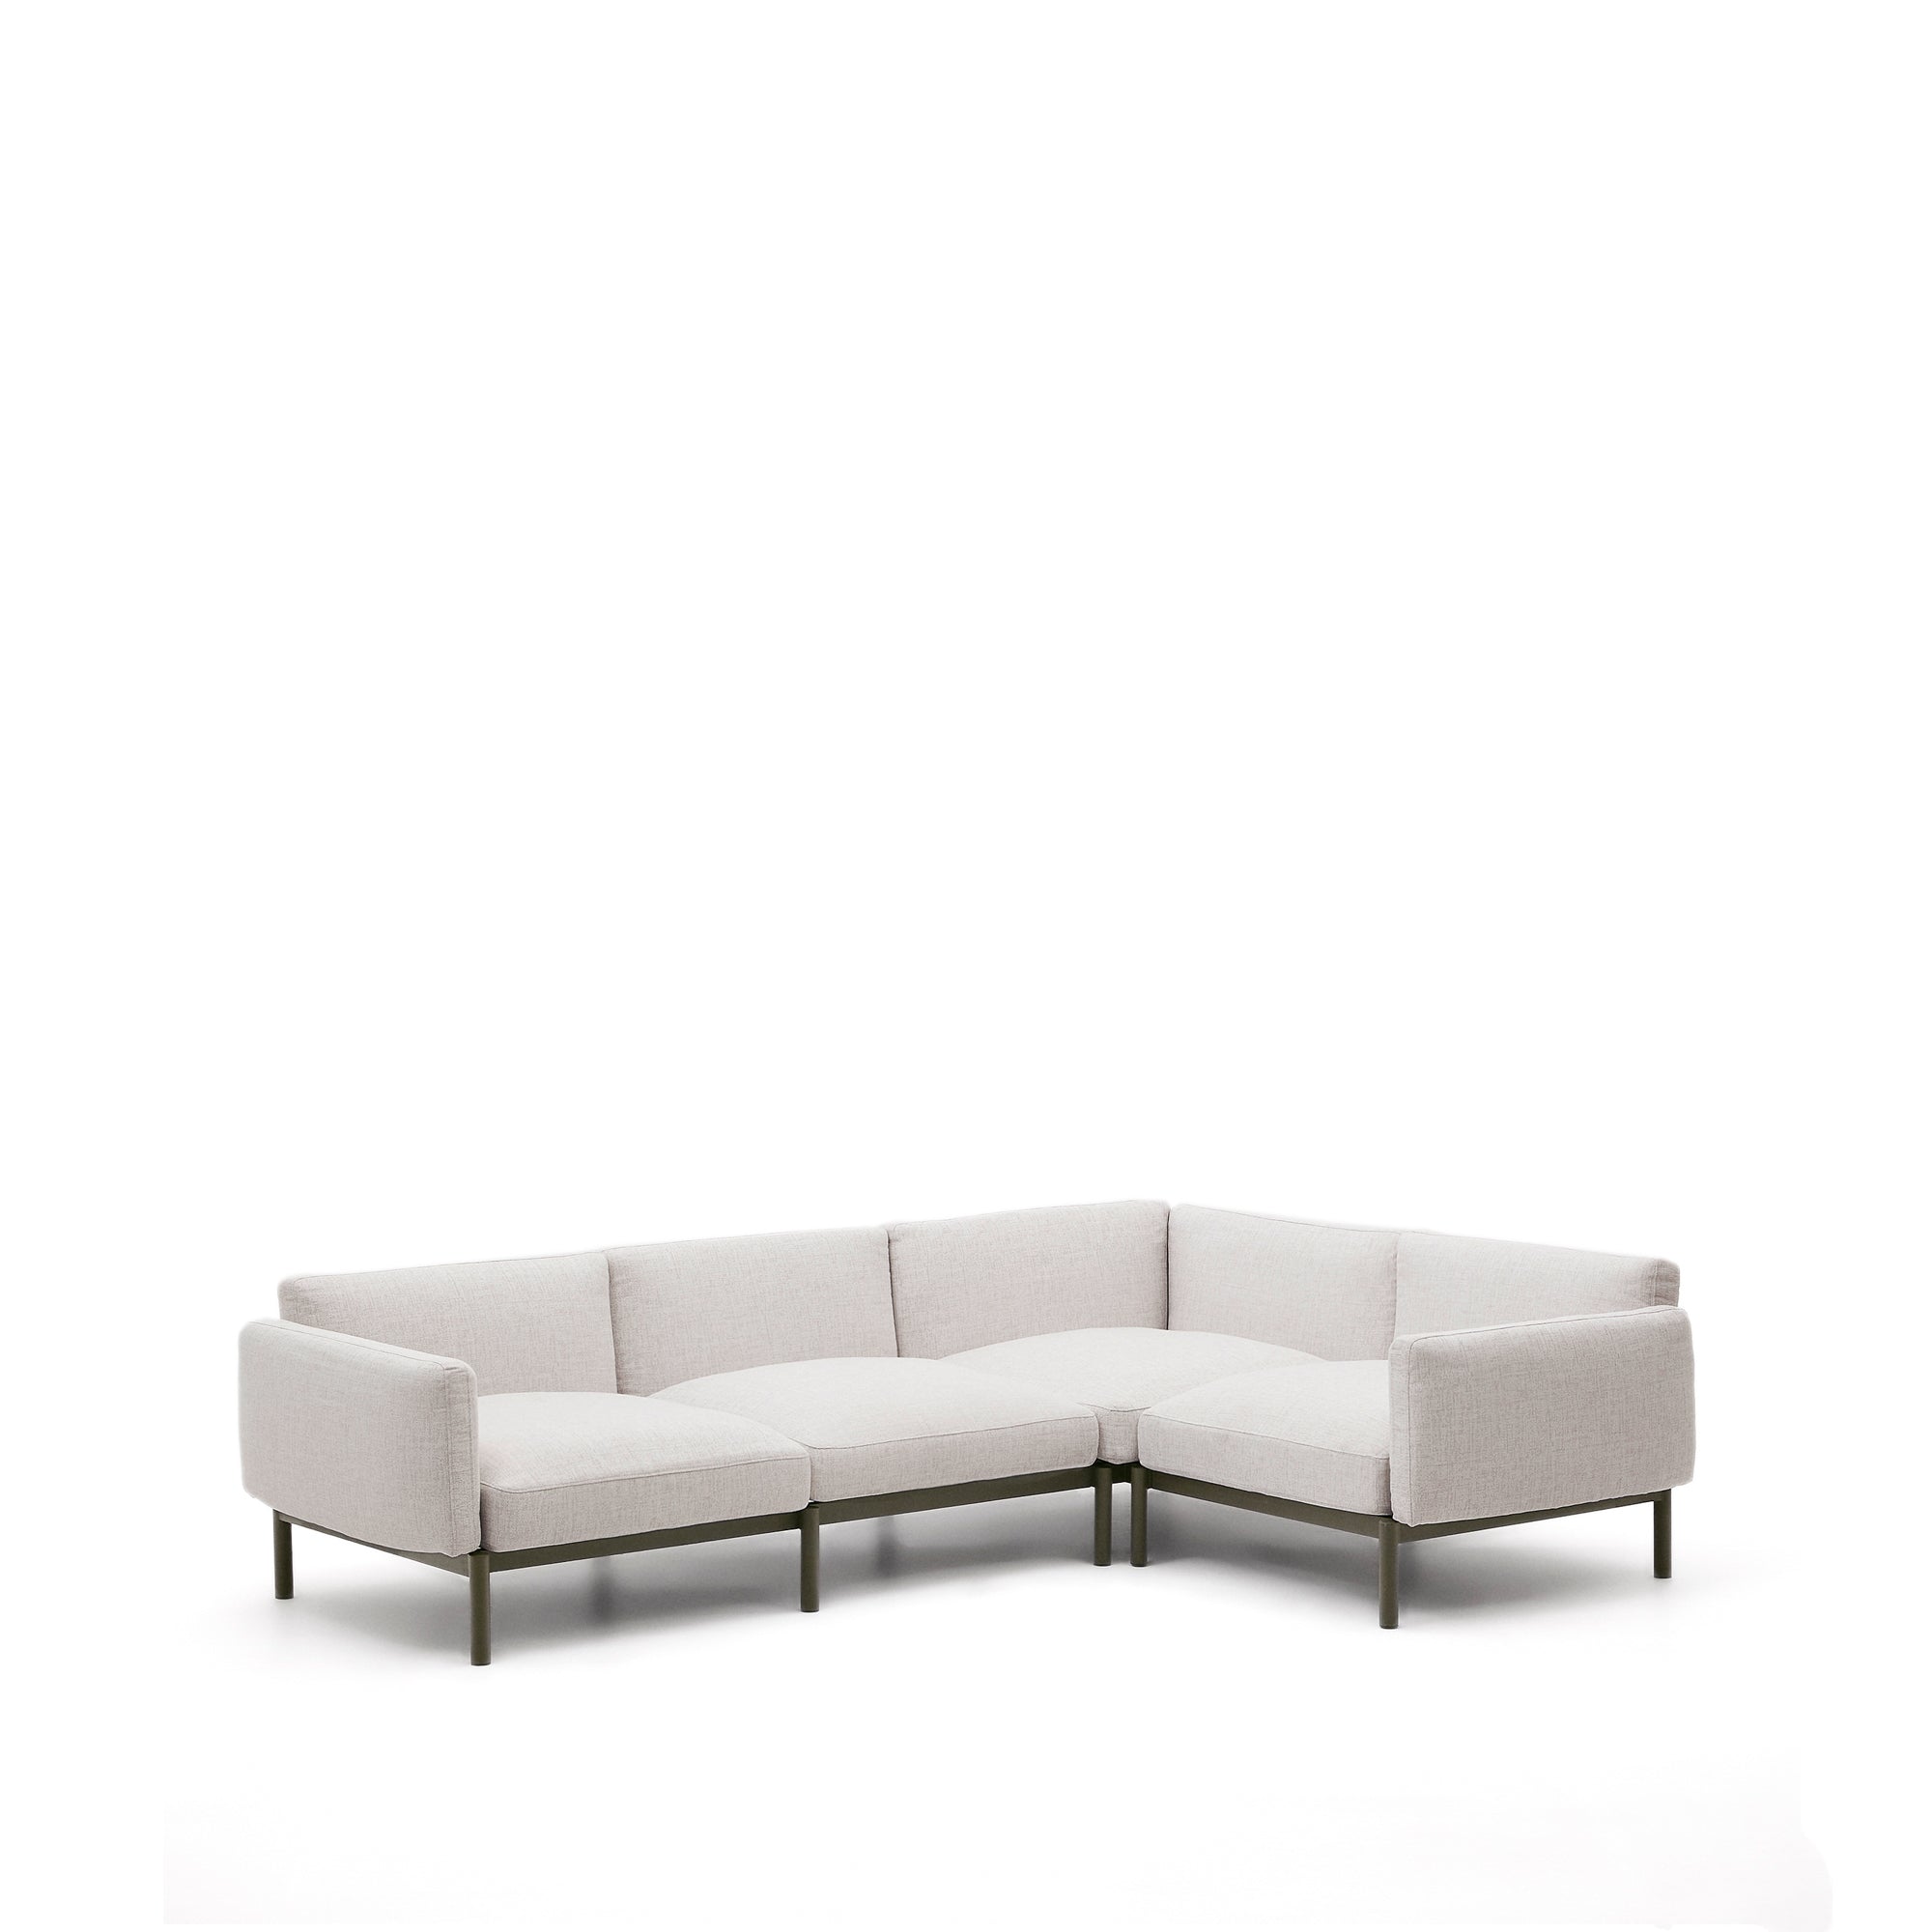 Sorells modular 5-seater outdoor corner sofa in aluminum with green finish, 266 cm